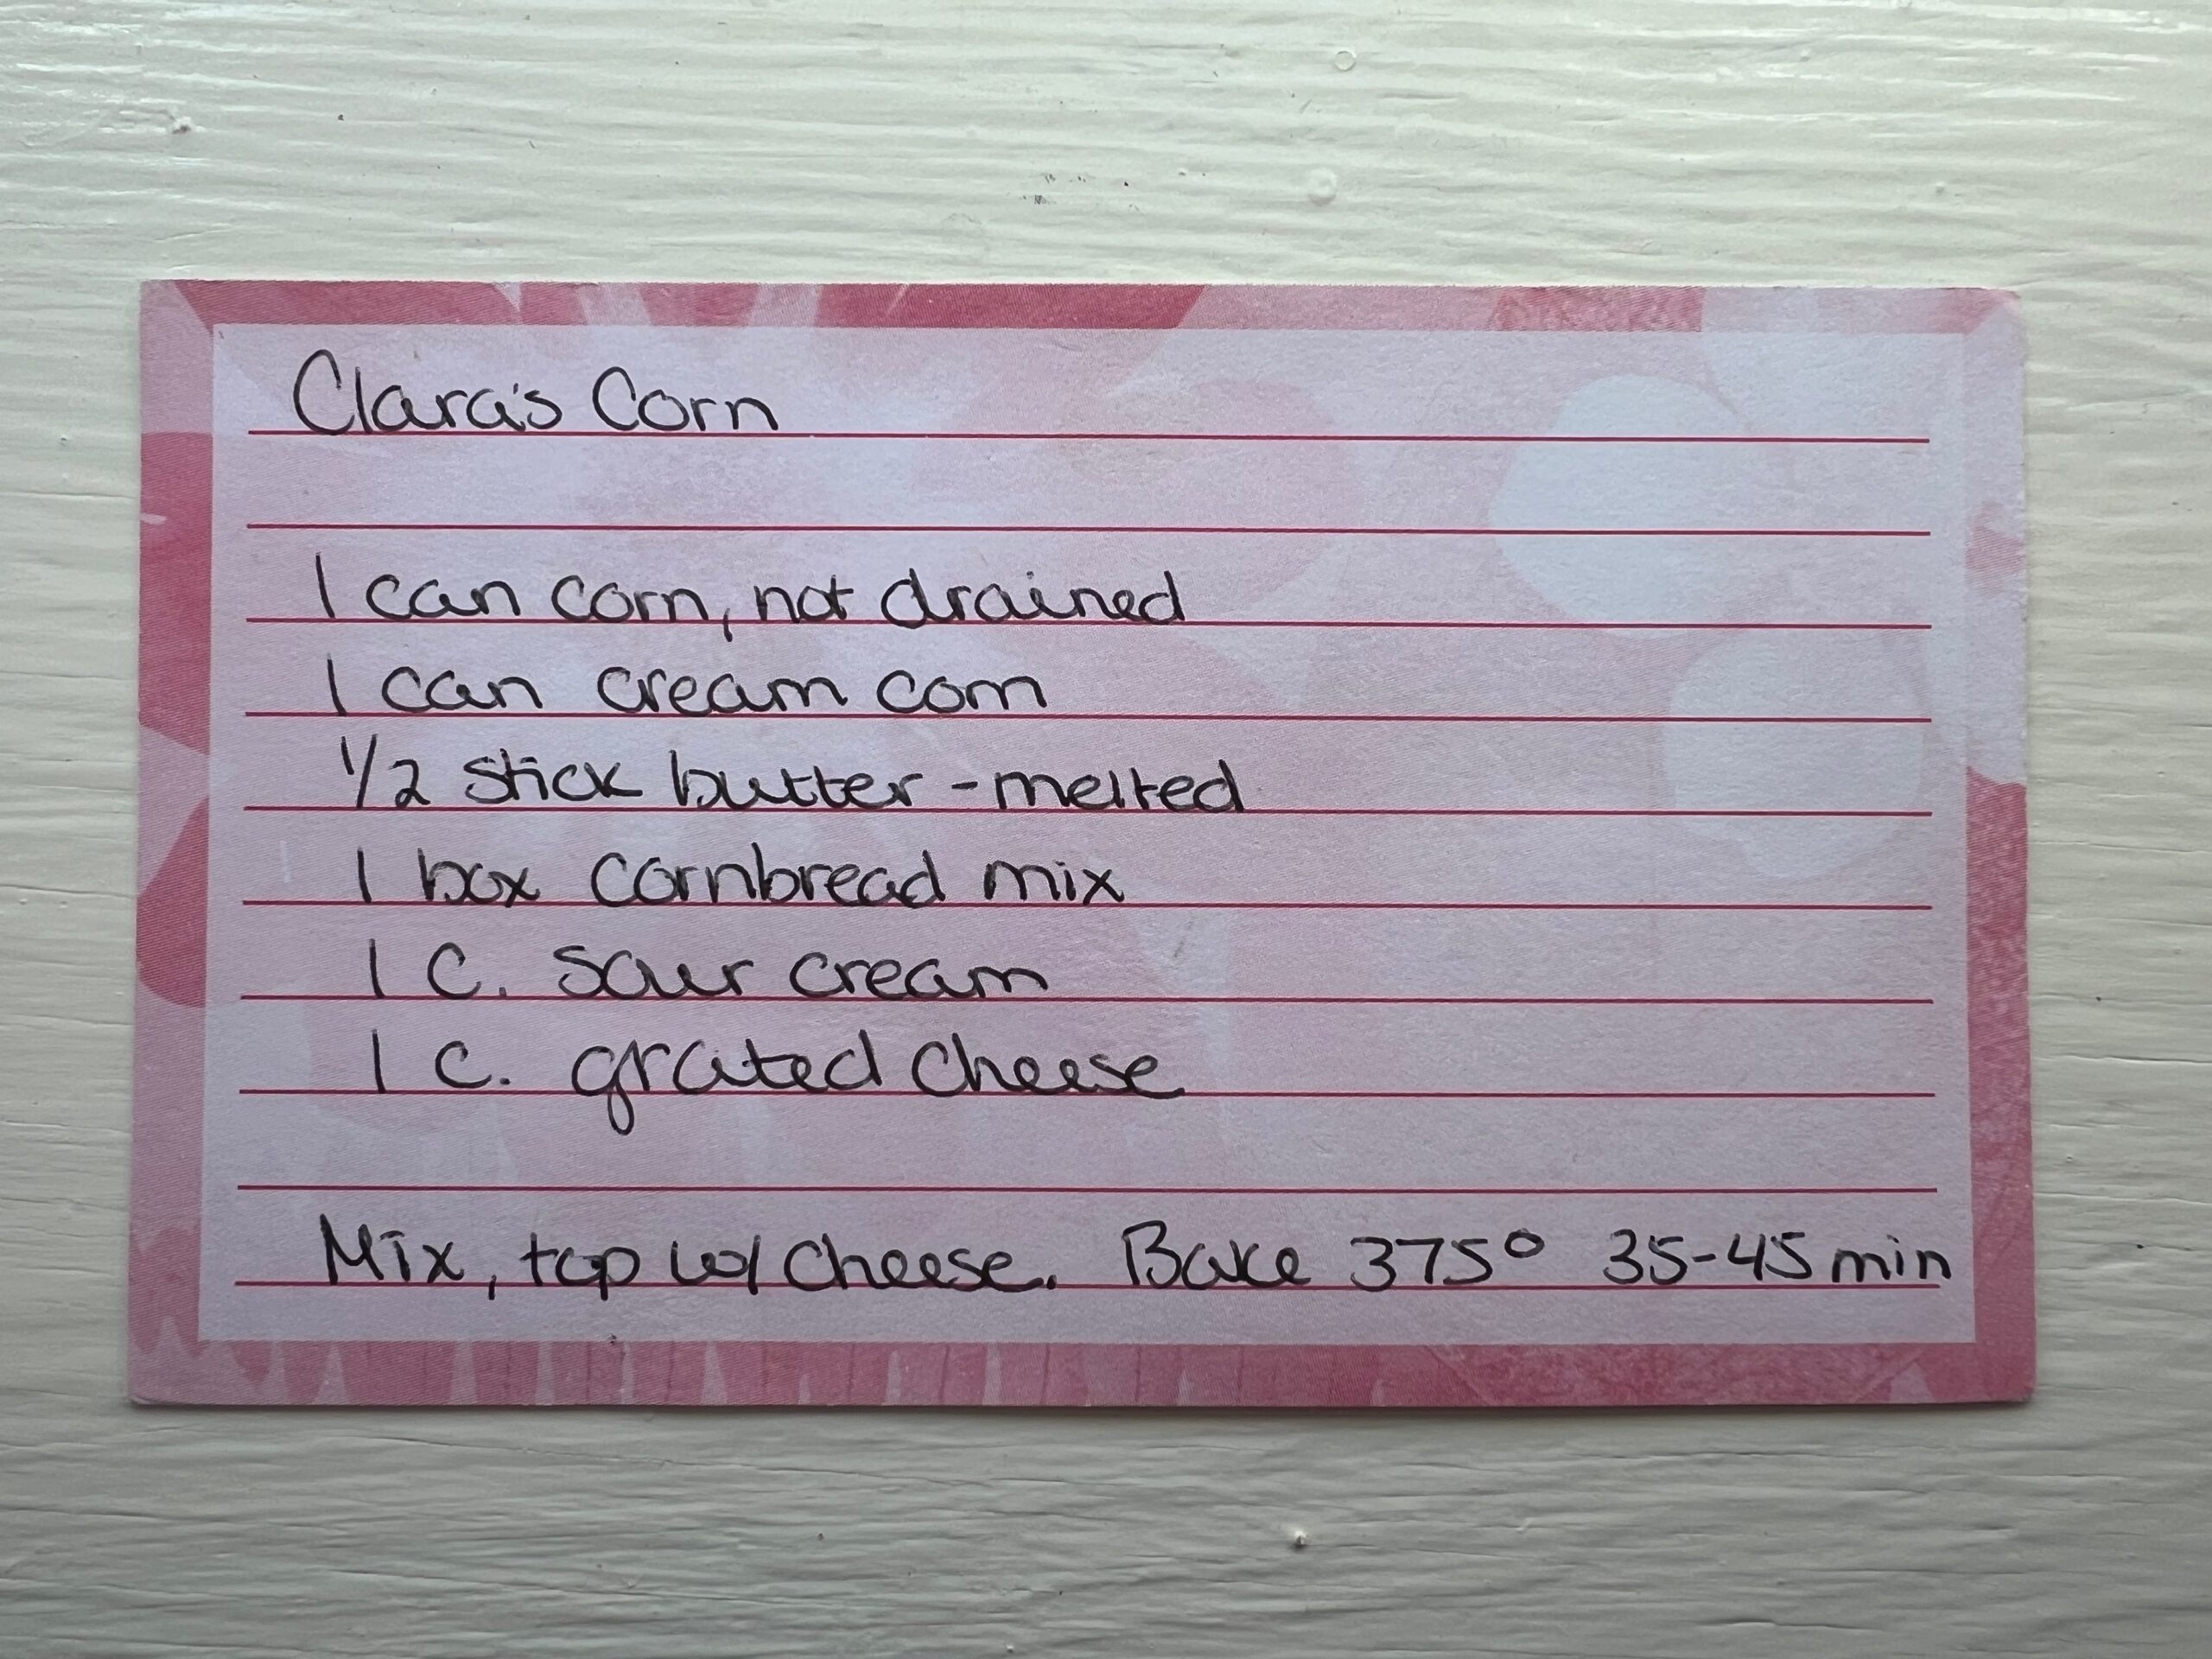 Clara's corn recipe card